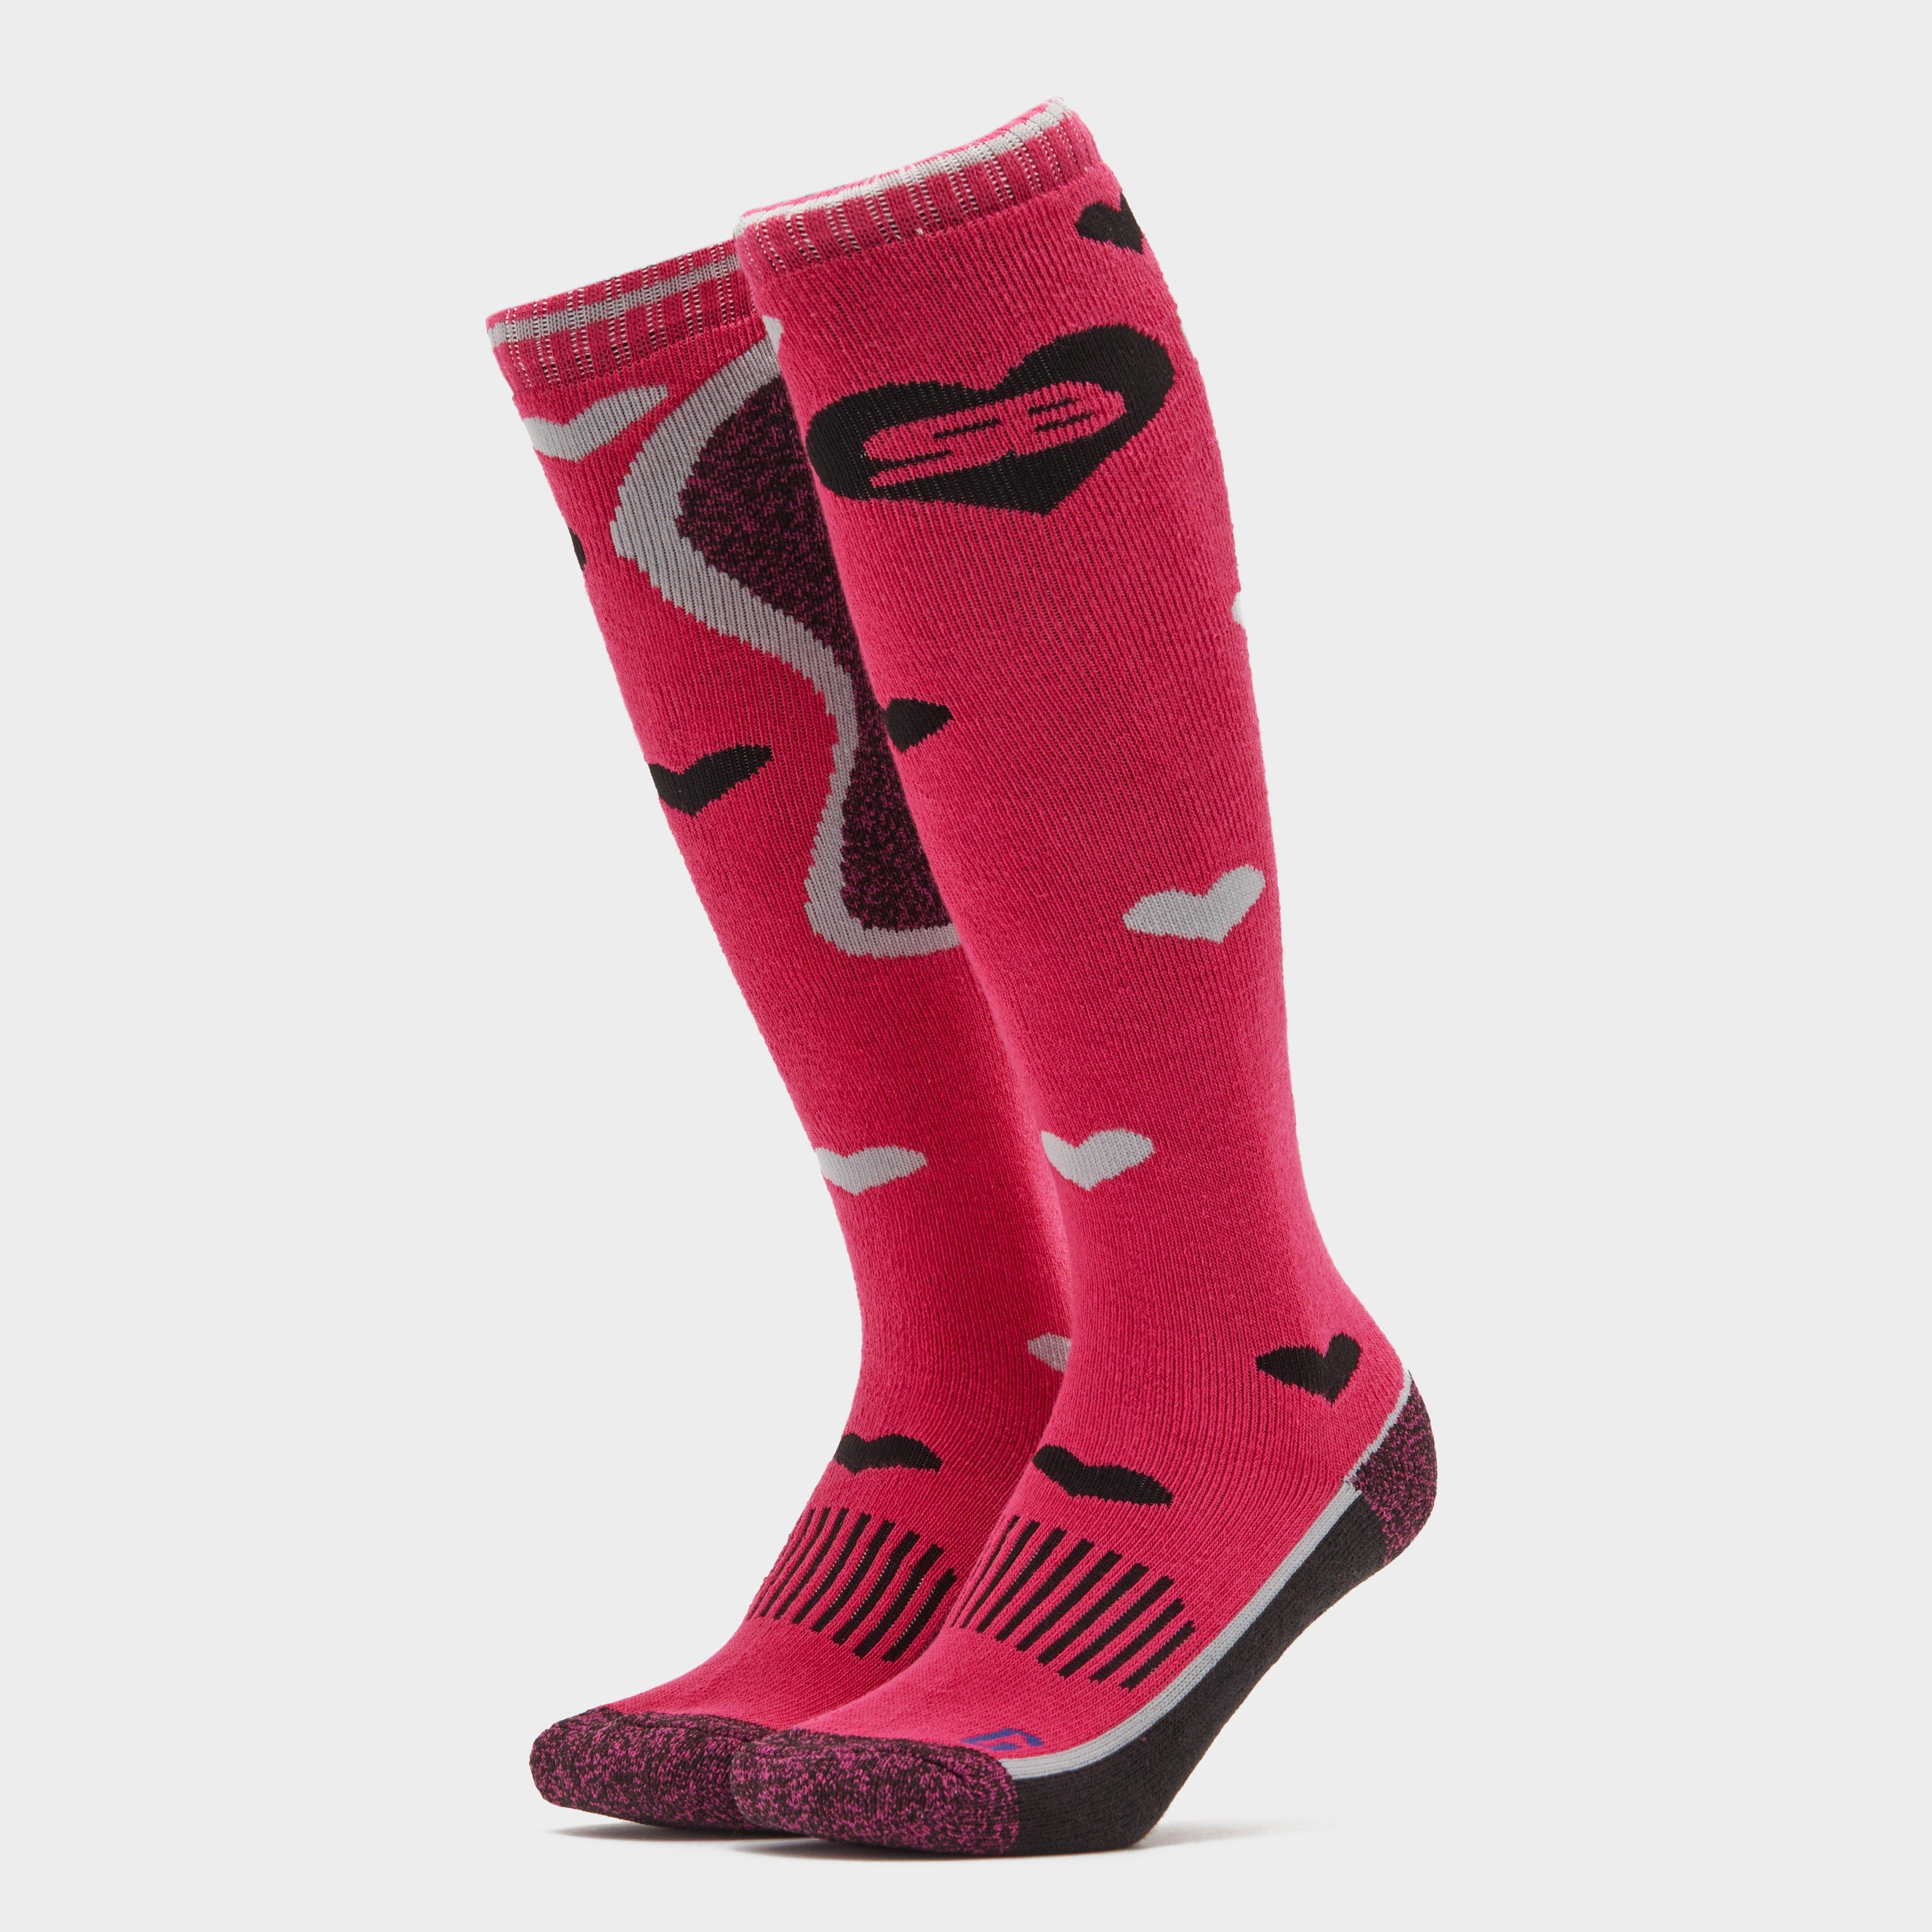 Storm Bloc Women's Patterdale Long Socks, Pink